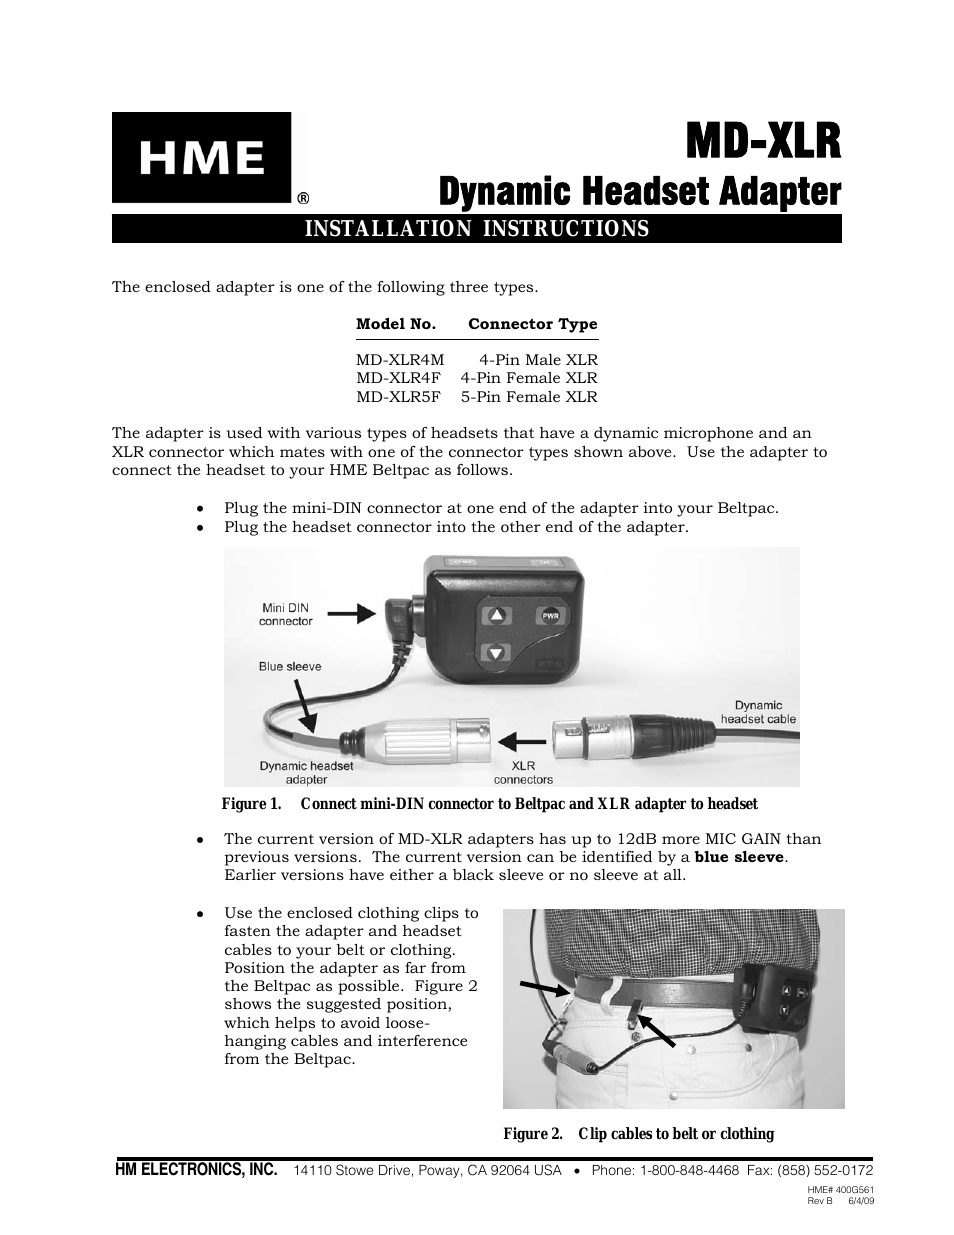 MD-XLR Headset Adapter